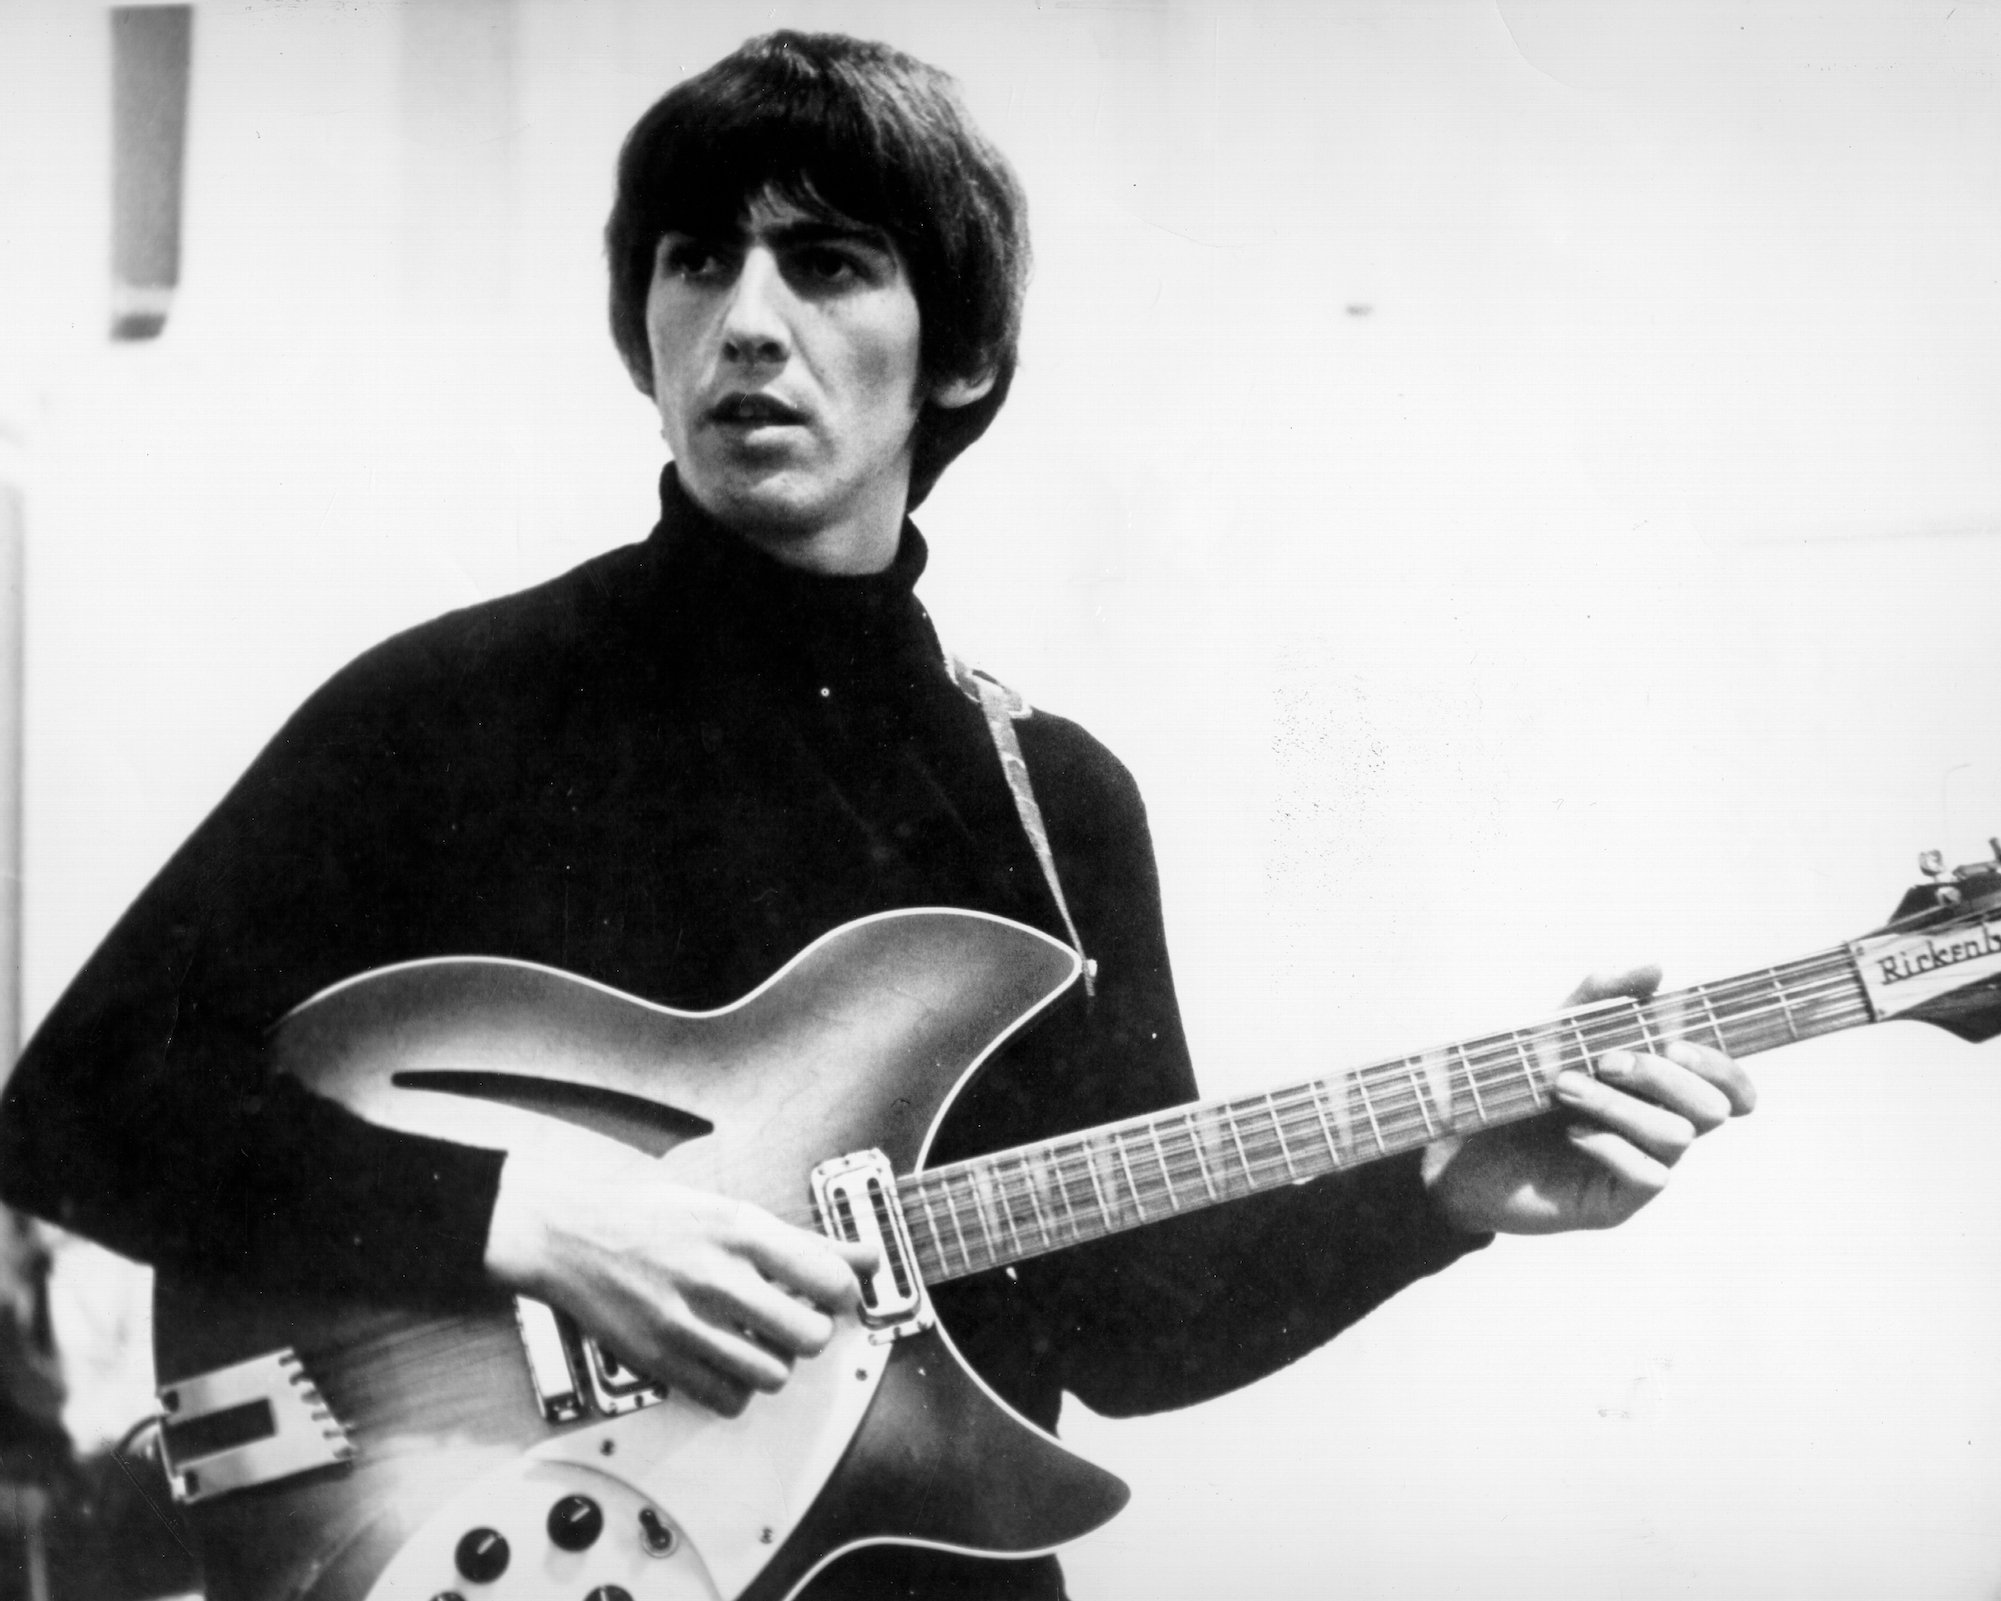 George Harrison of The Beatles plays the guitar in studio in 1965